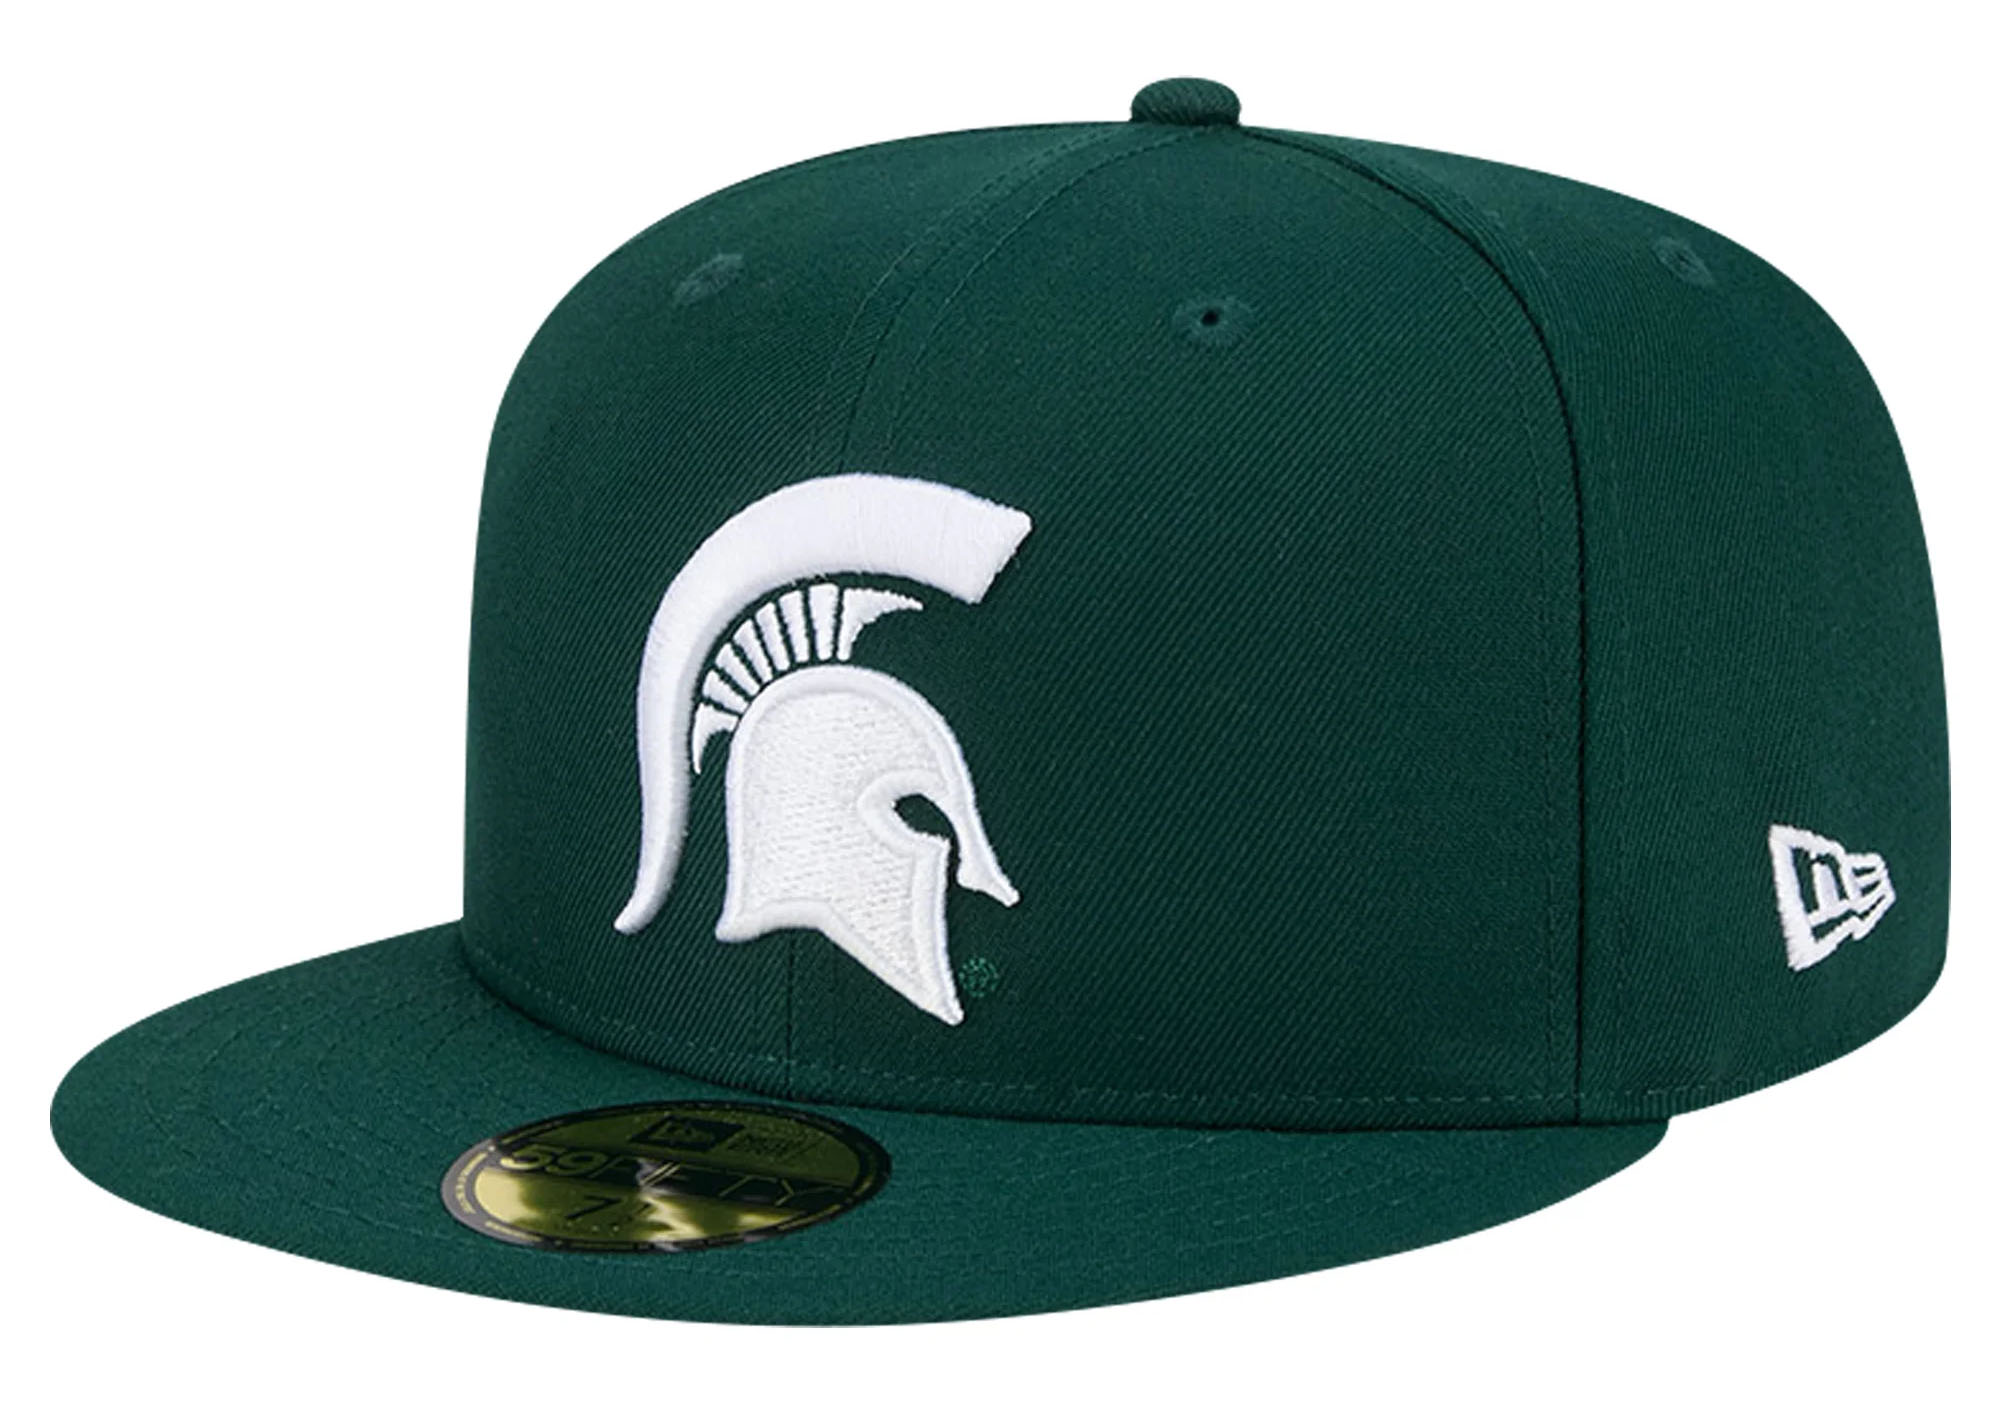 Michigan State New Era Fitted Hat